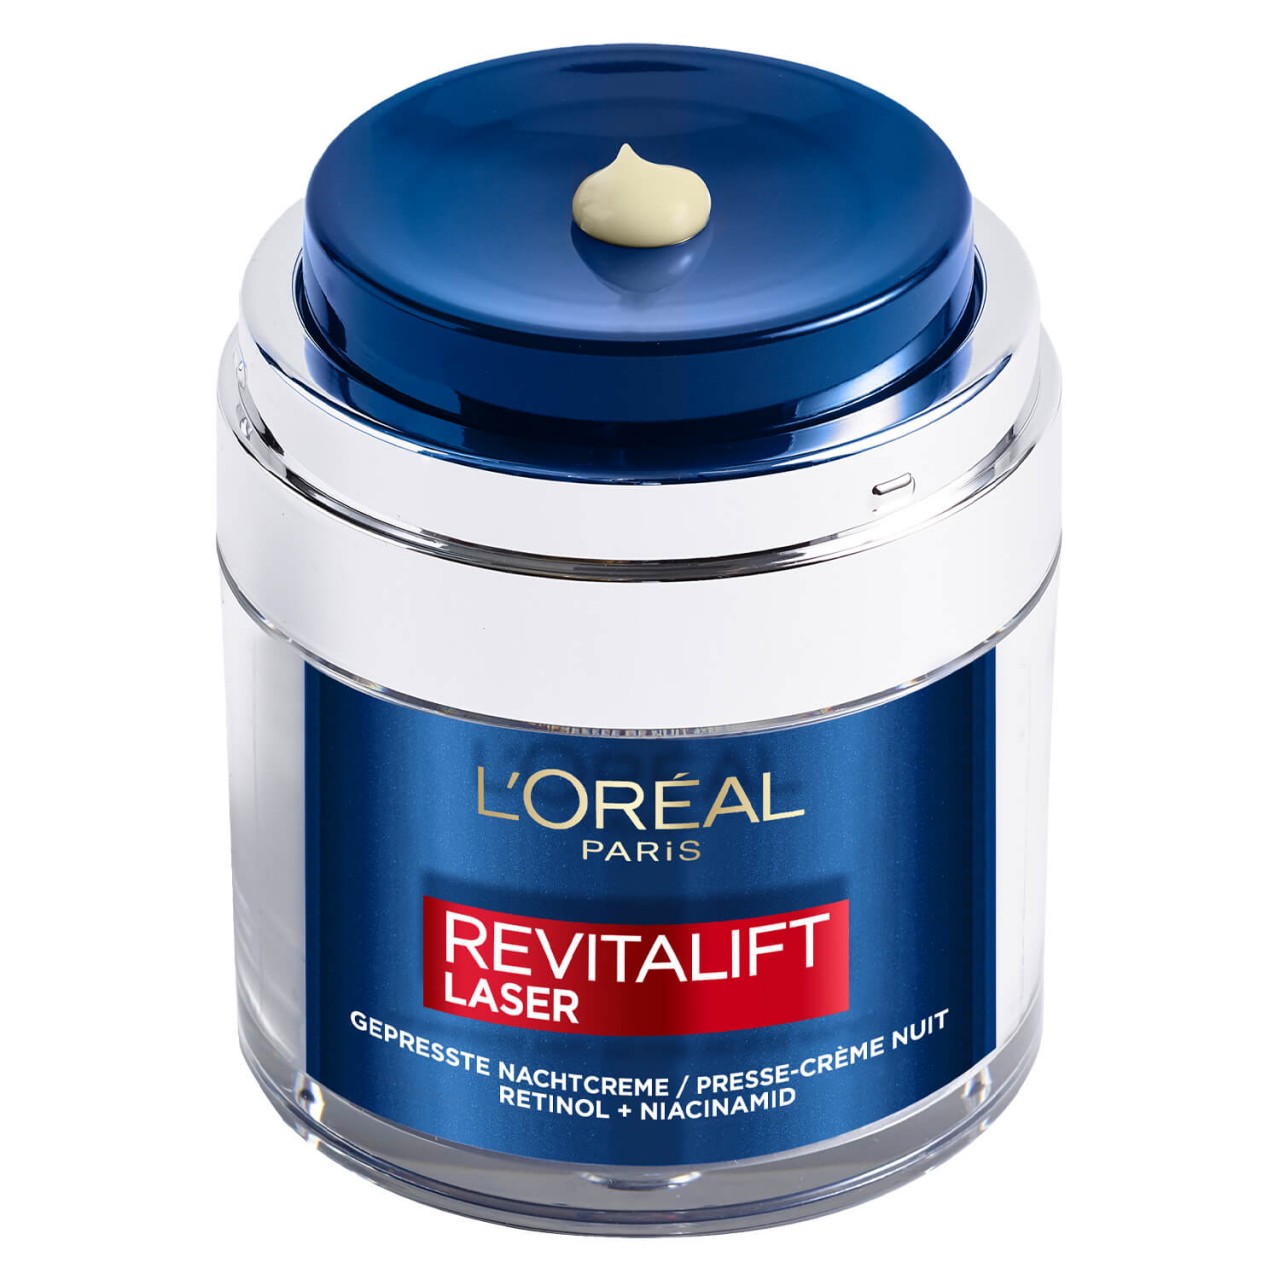 LOréal Skin Expert - Revitalift Laser Gepresste Nachtcreme Retinol + Niacinamid von L'Oréal Paris